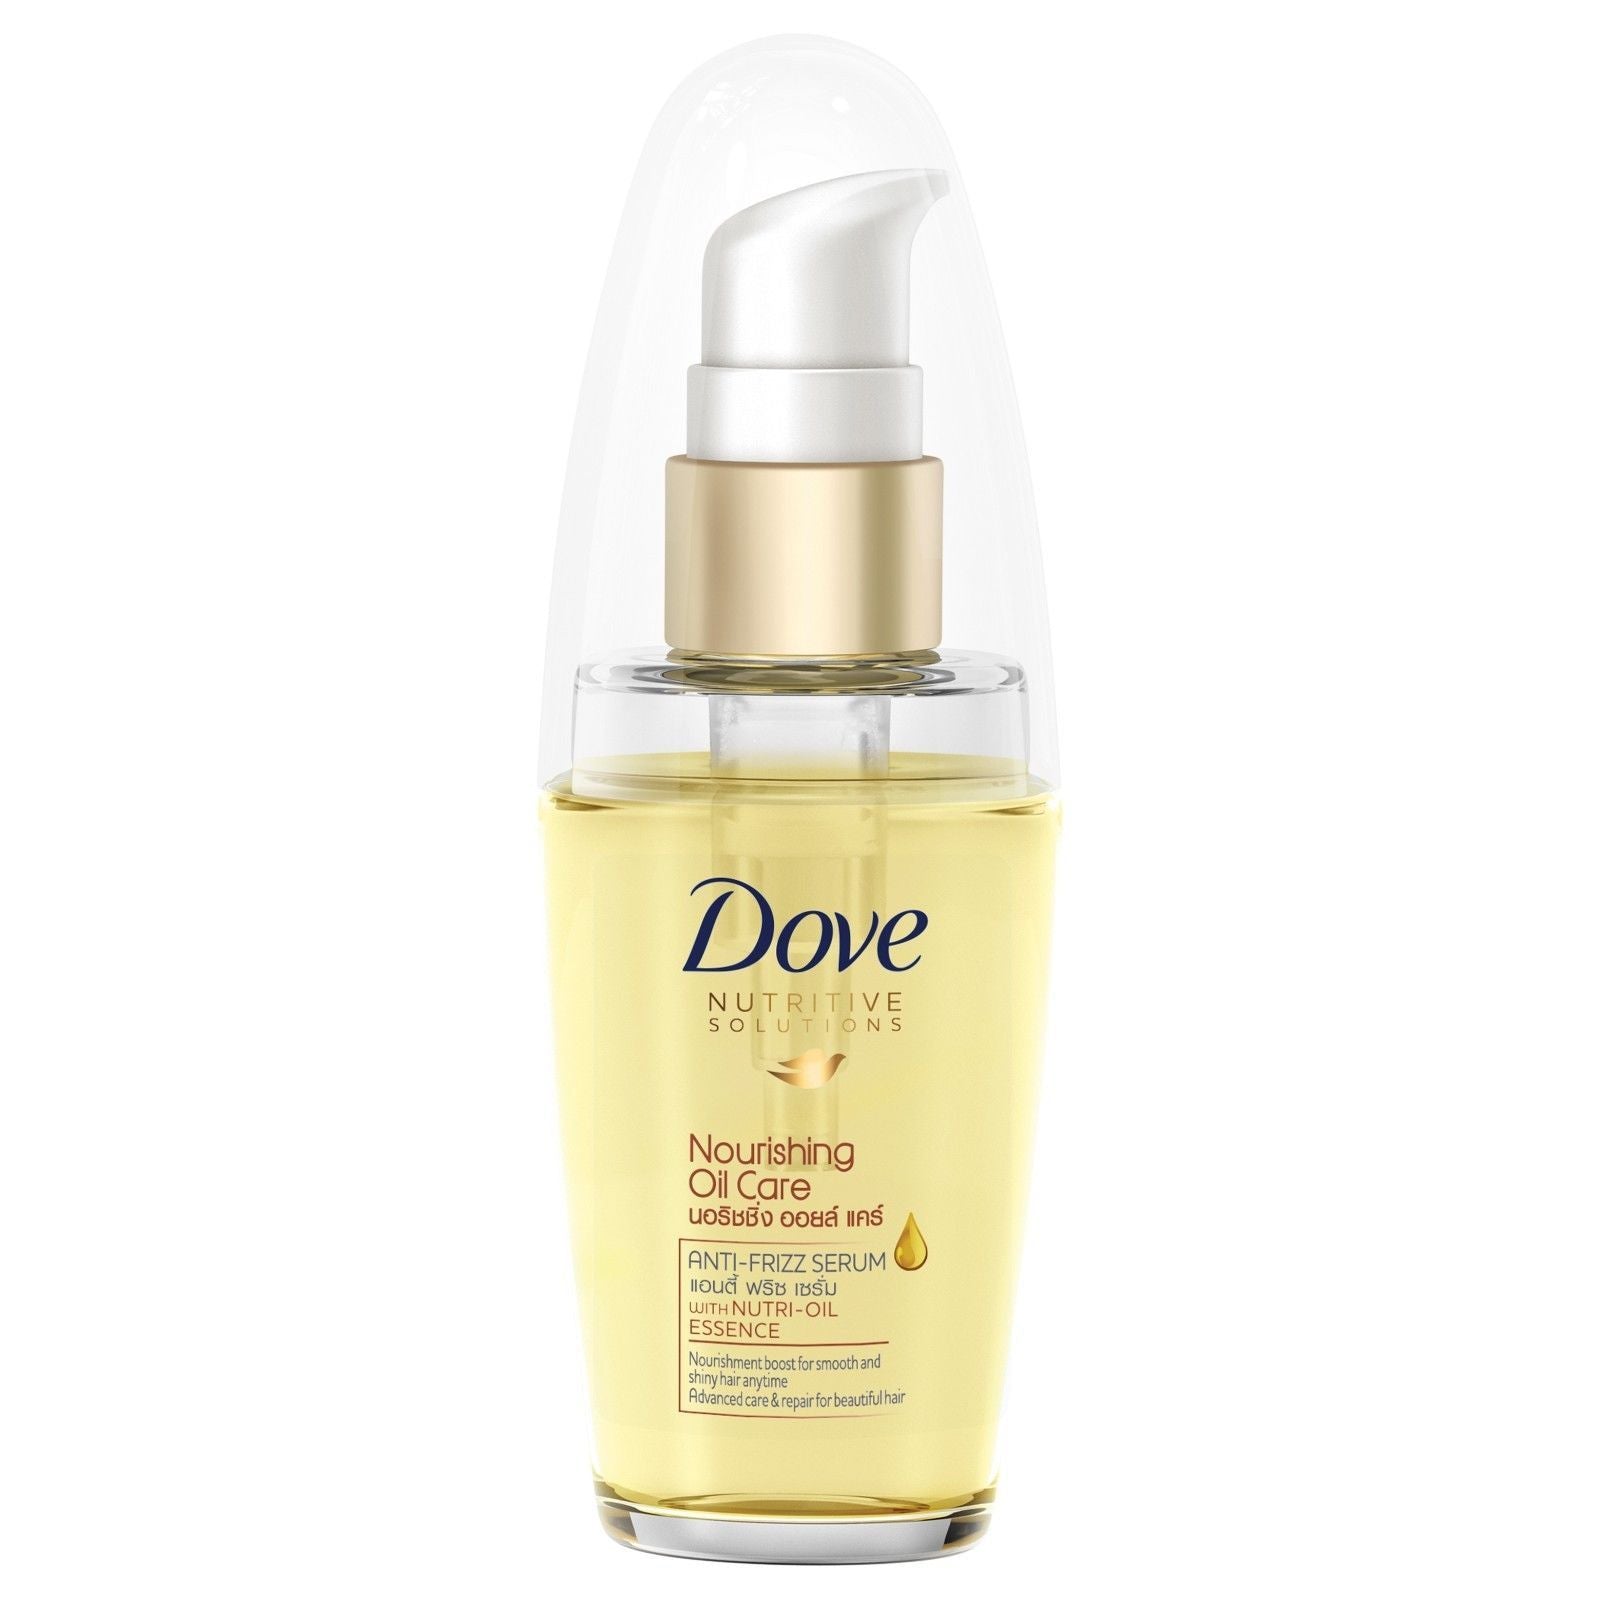 Dove Nourishing Oil Care Anti Frizz Hair Fall Rescue Serum 40ml - Asian Beauty Supply